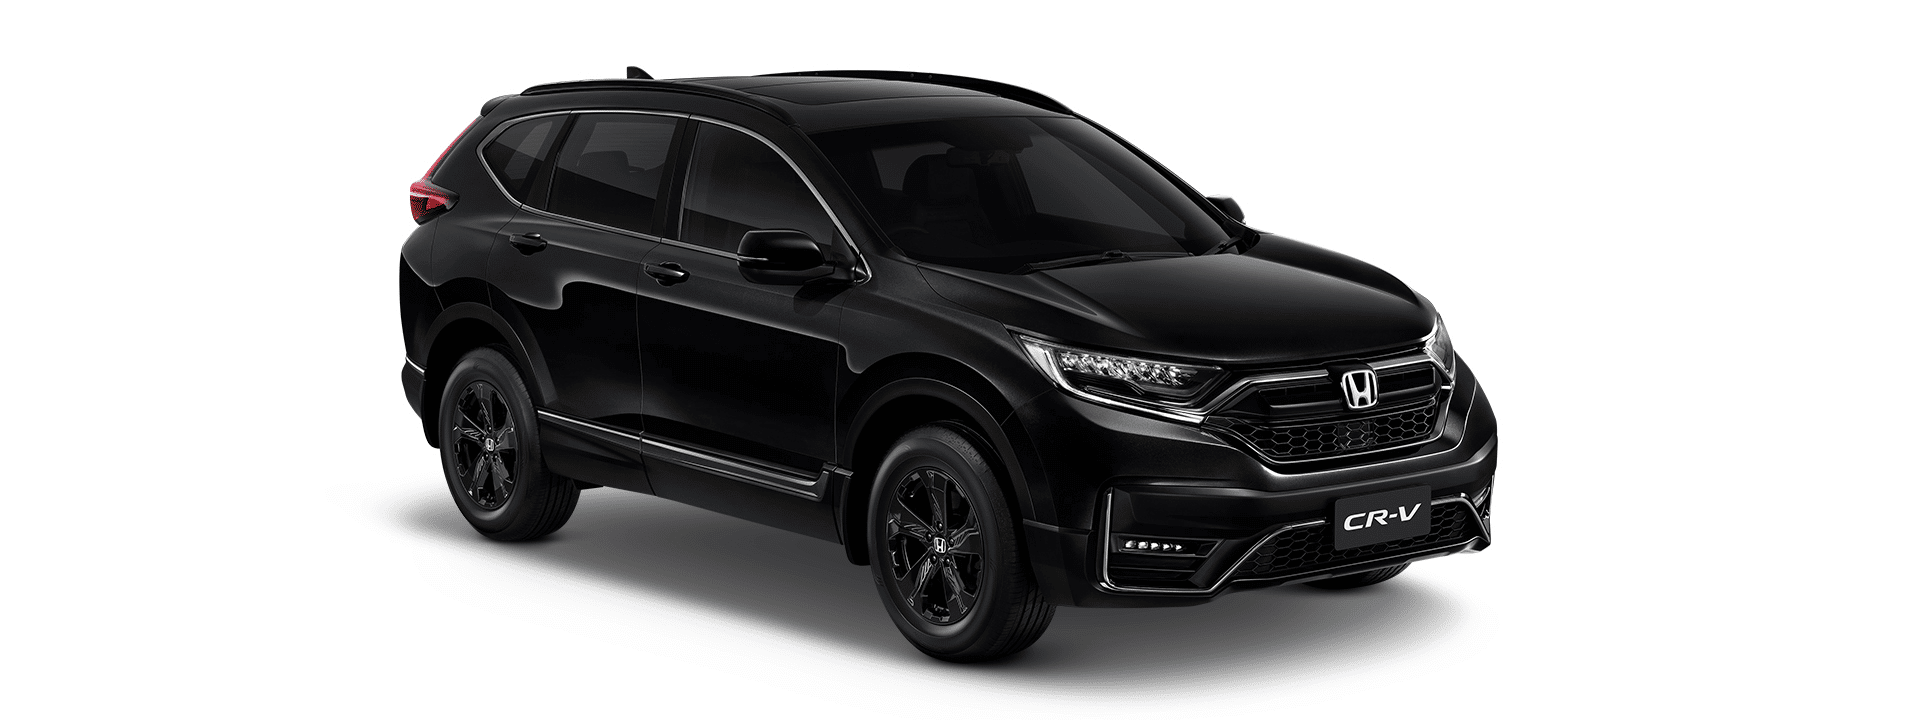 Honda CR-V 2021 รุ่น 2.4 BLACK EDITION ราคา 1,467,000 บาท